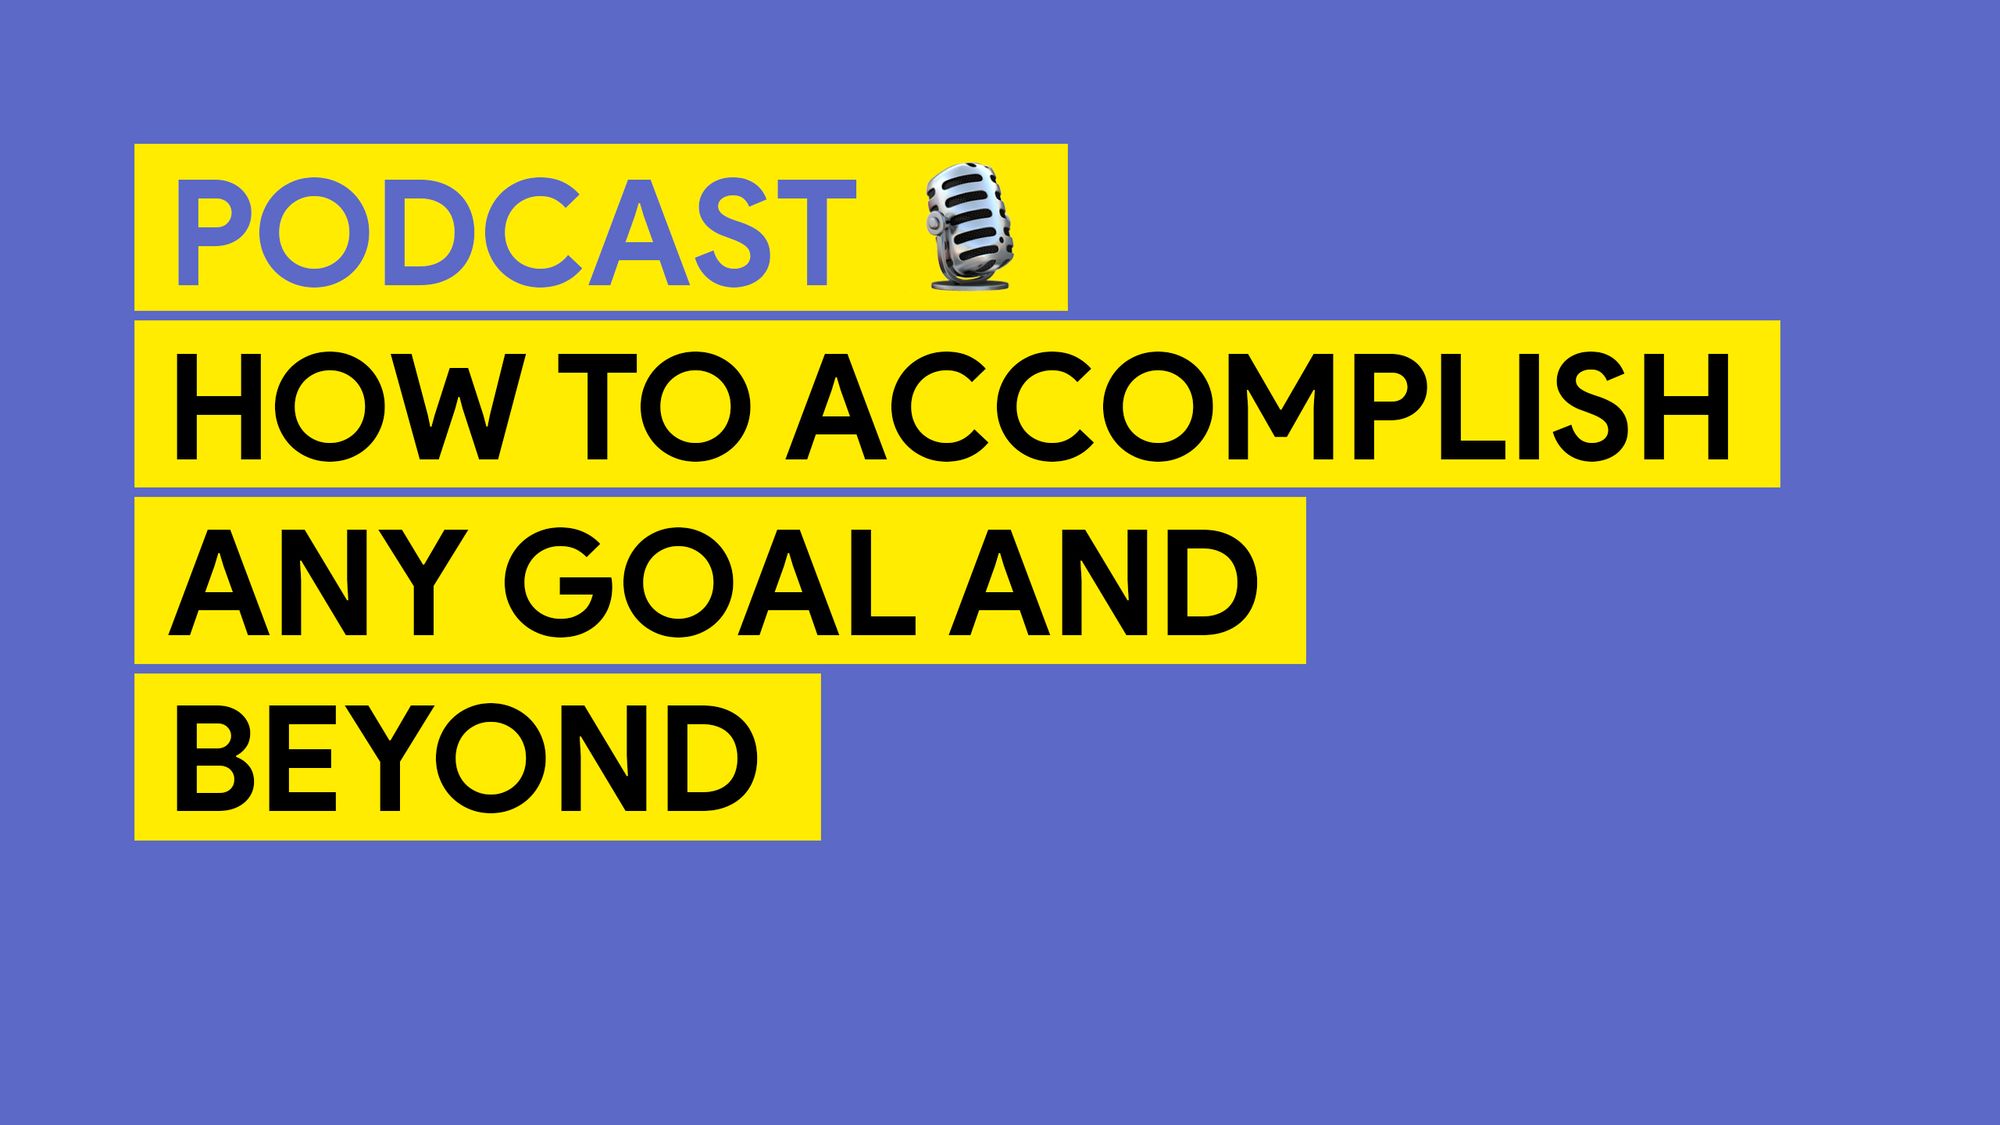 How to accomplish any goal and beyond